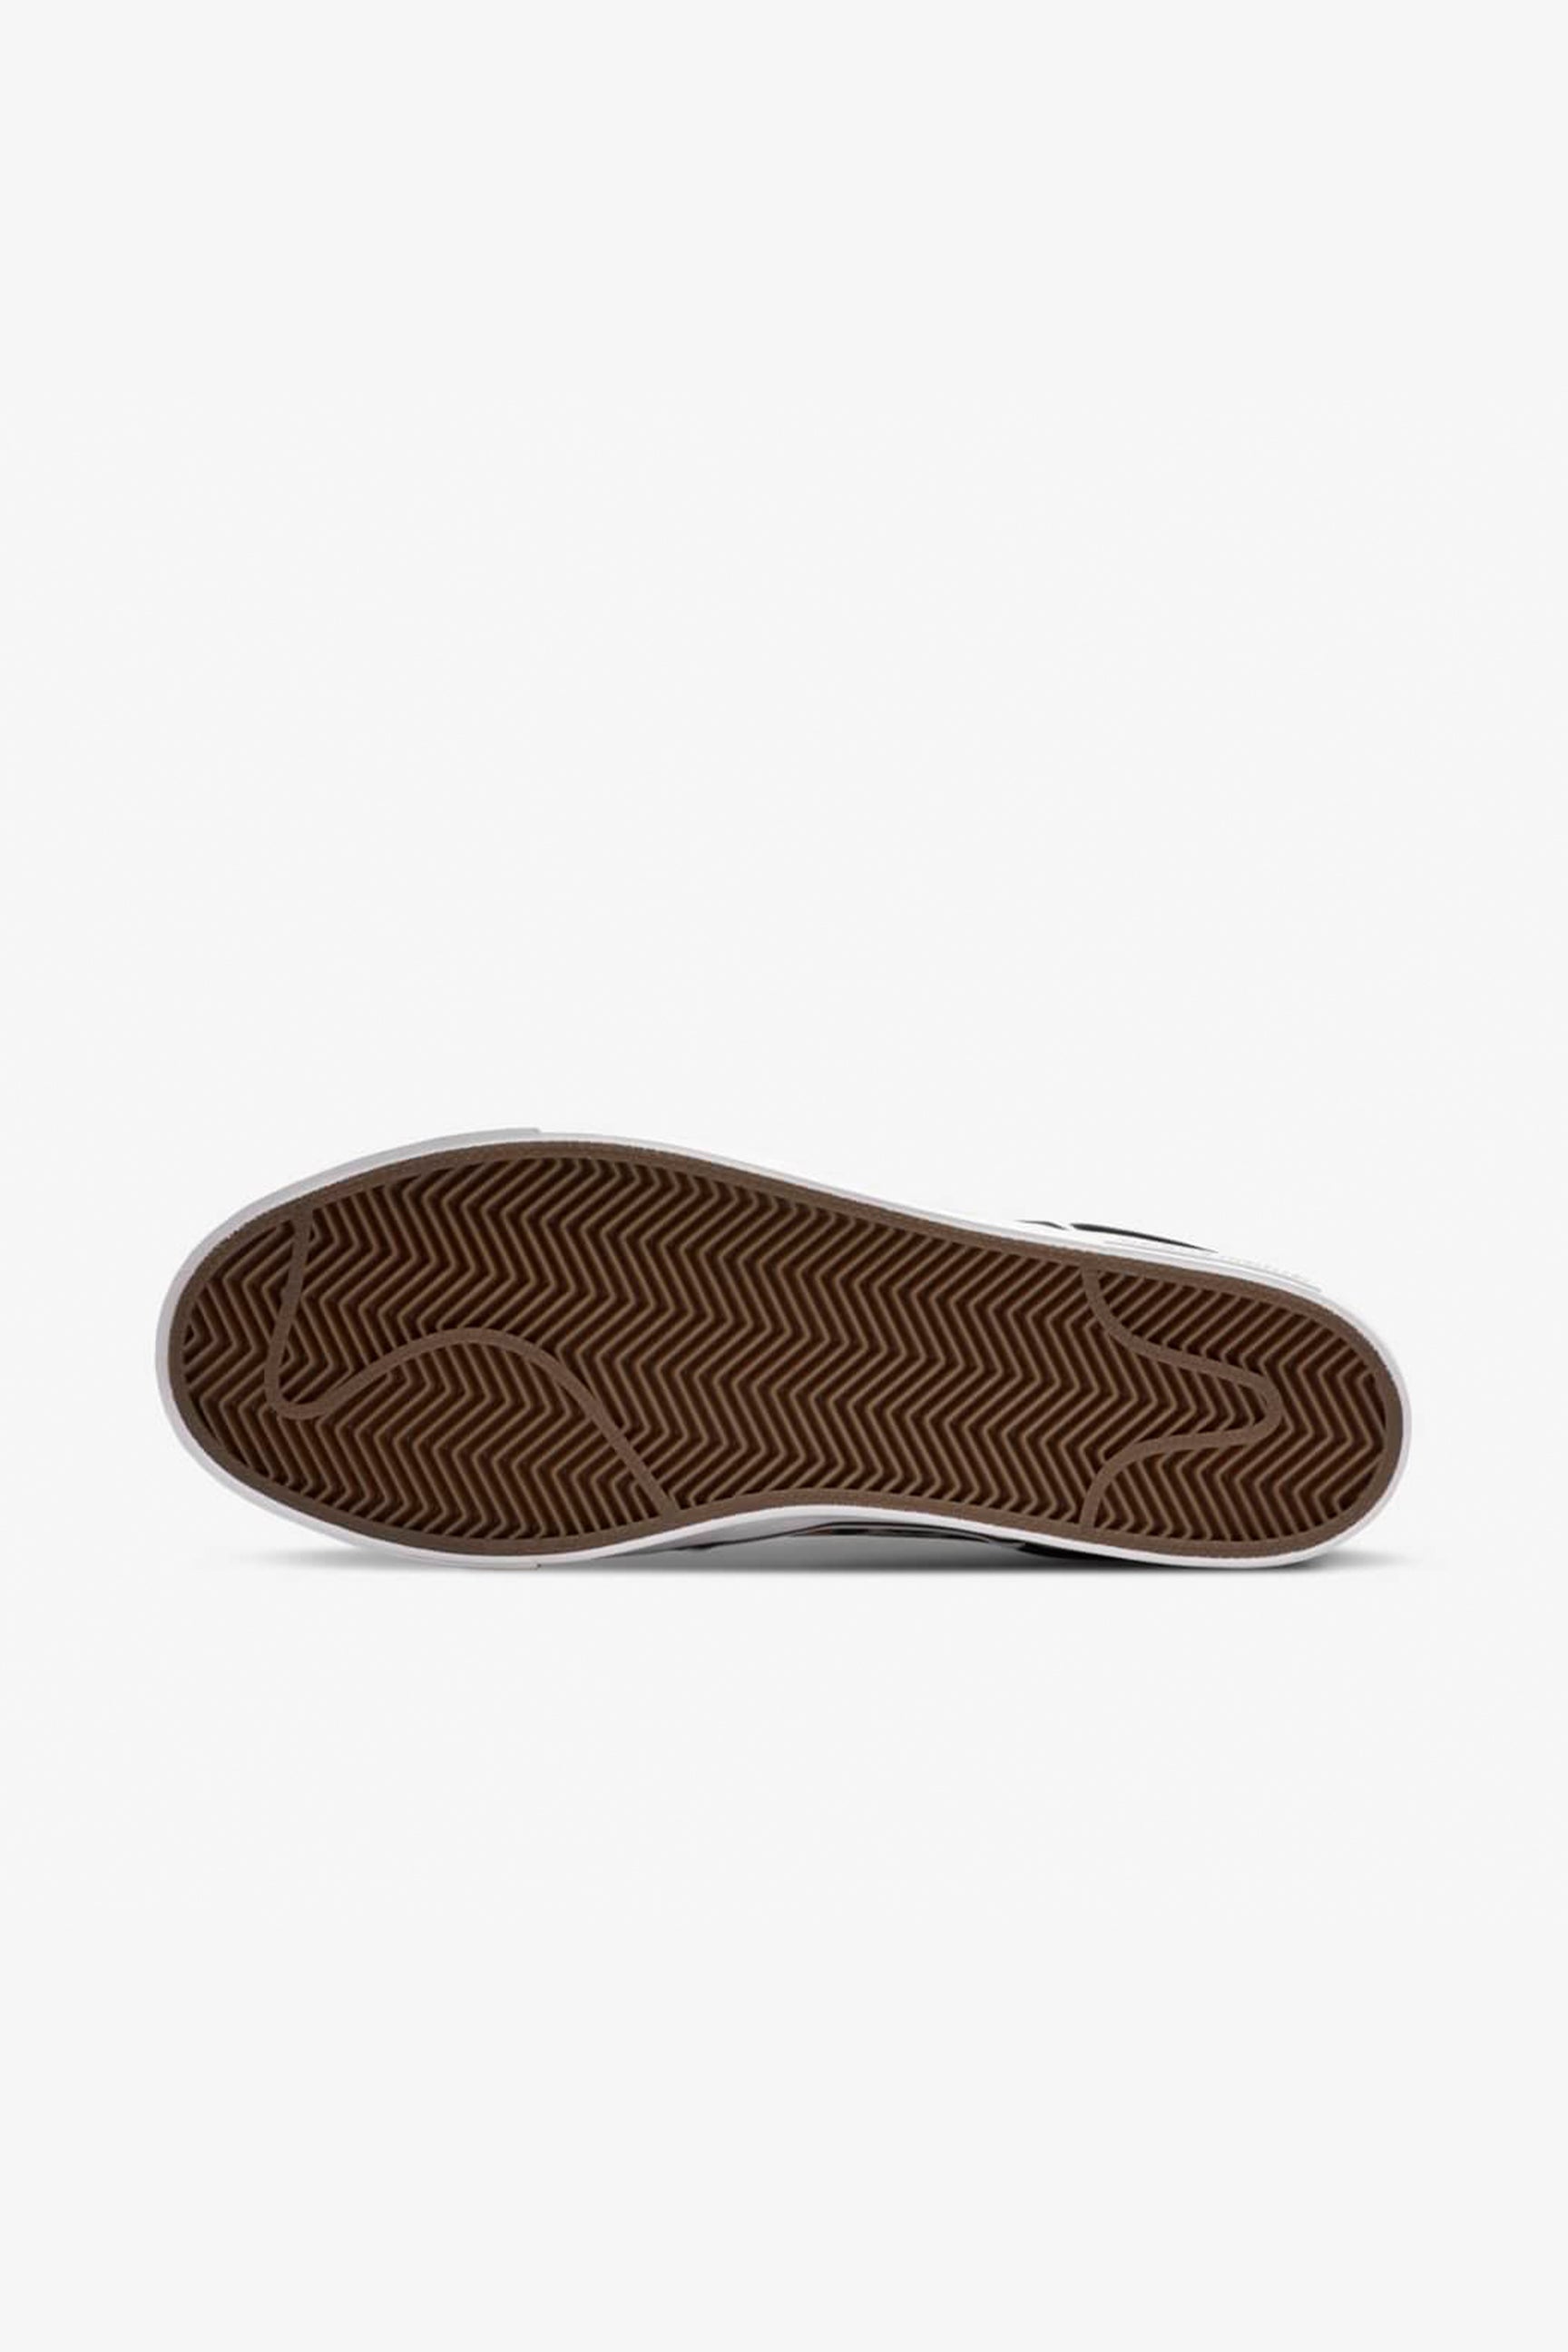 Selectshop FRAME - NIKE SB Janoski Canvas OG "Wacko Maria" Footwear Dubai